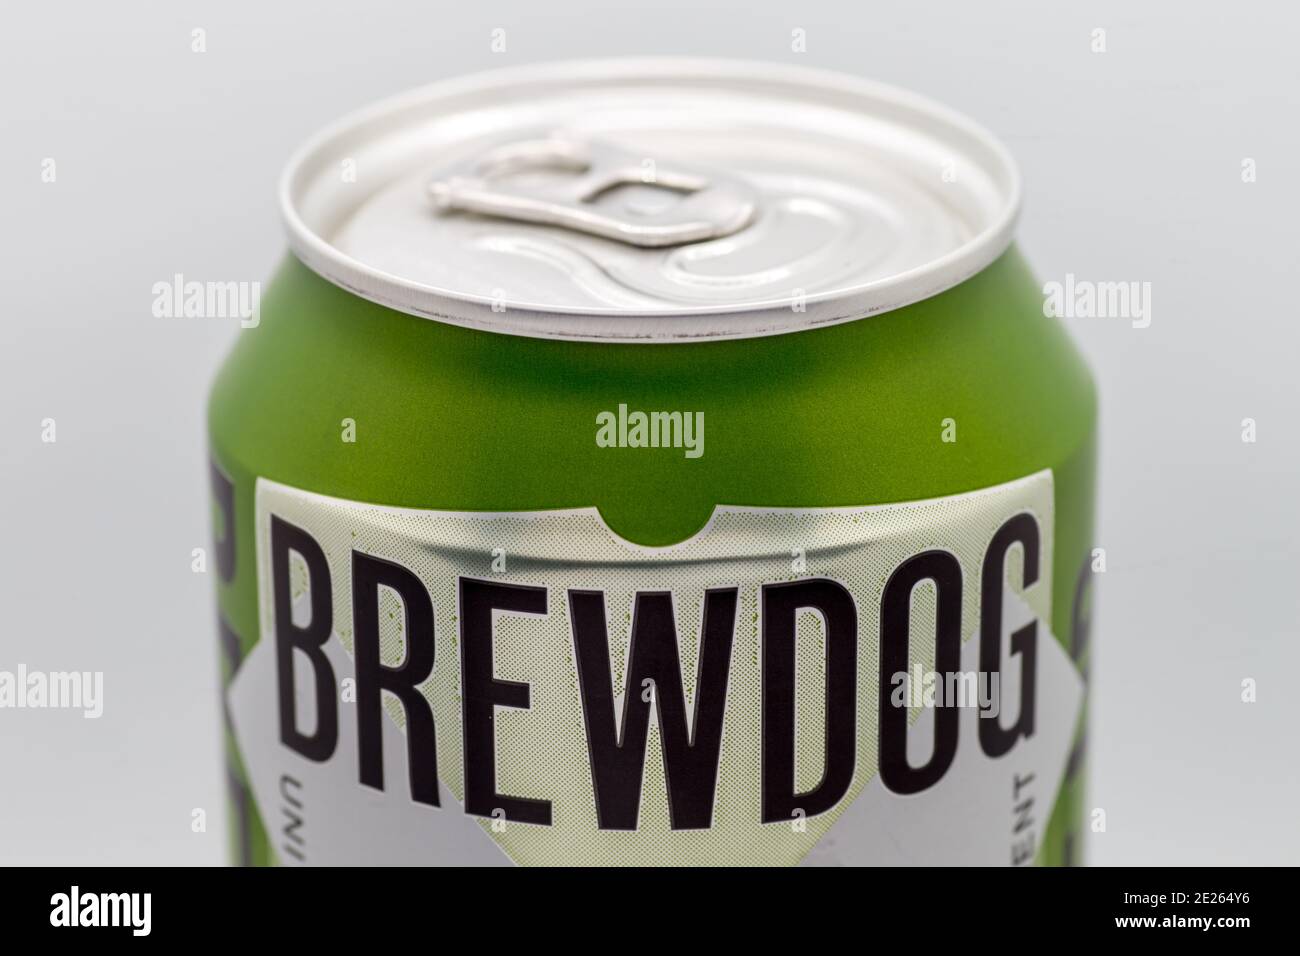 Brewdog Craft ale can Stock Photo